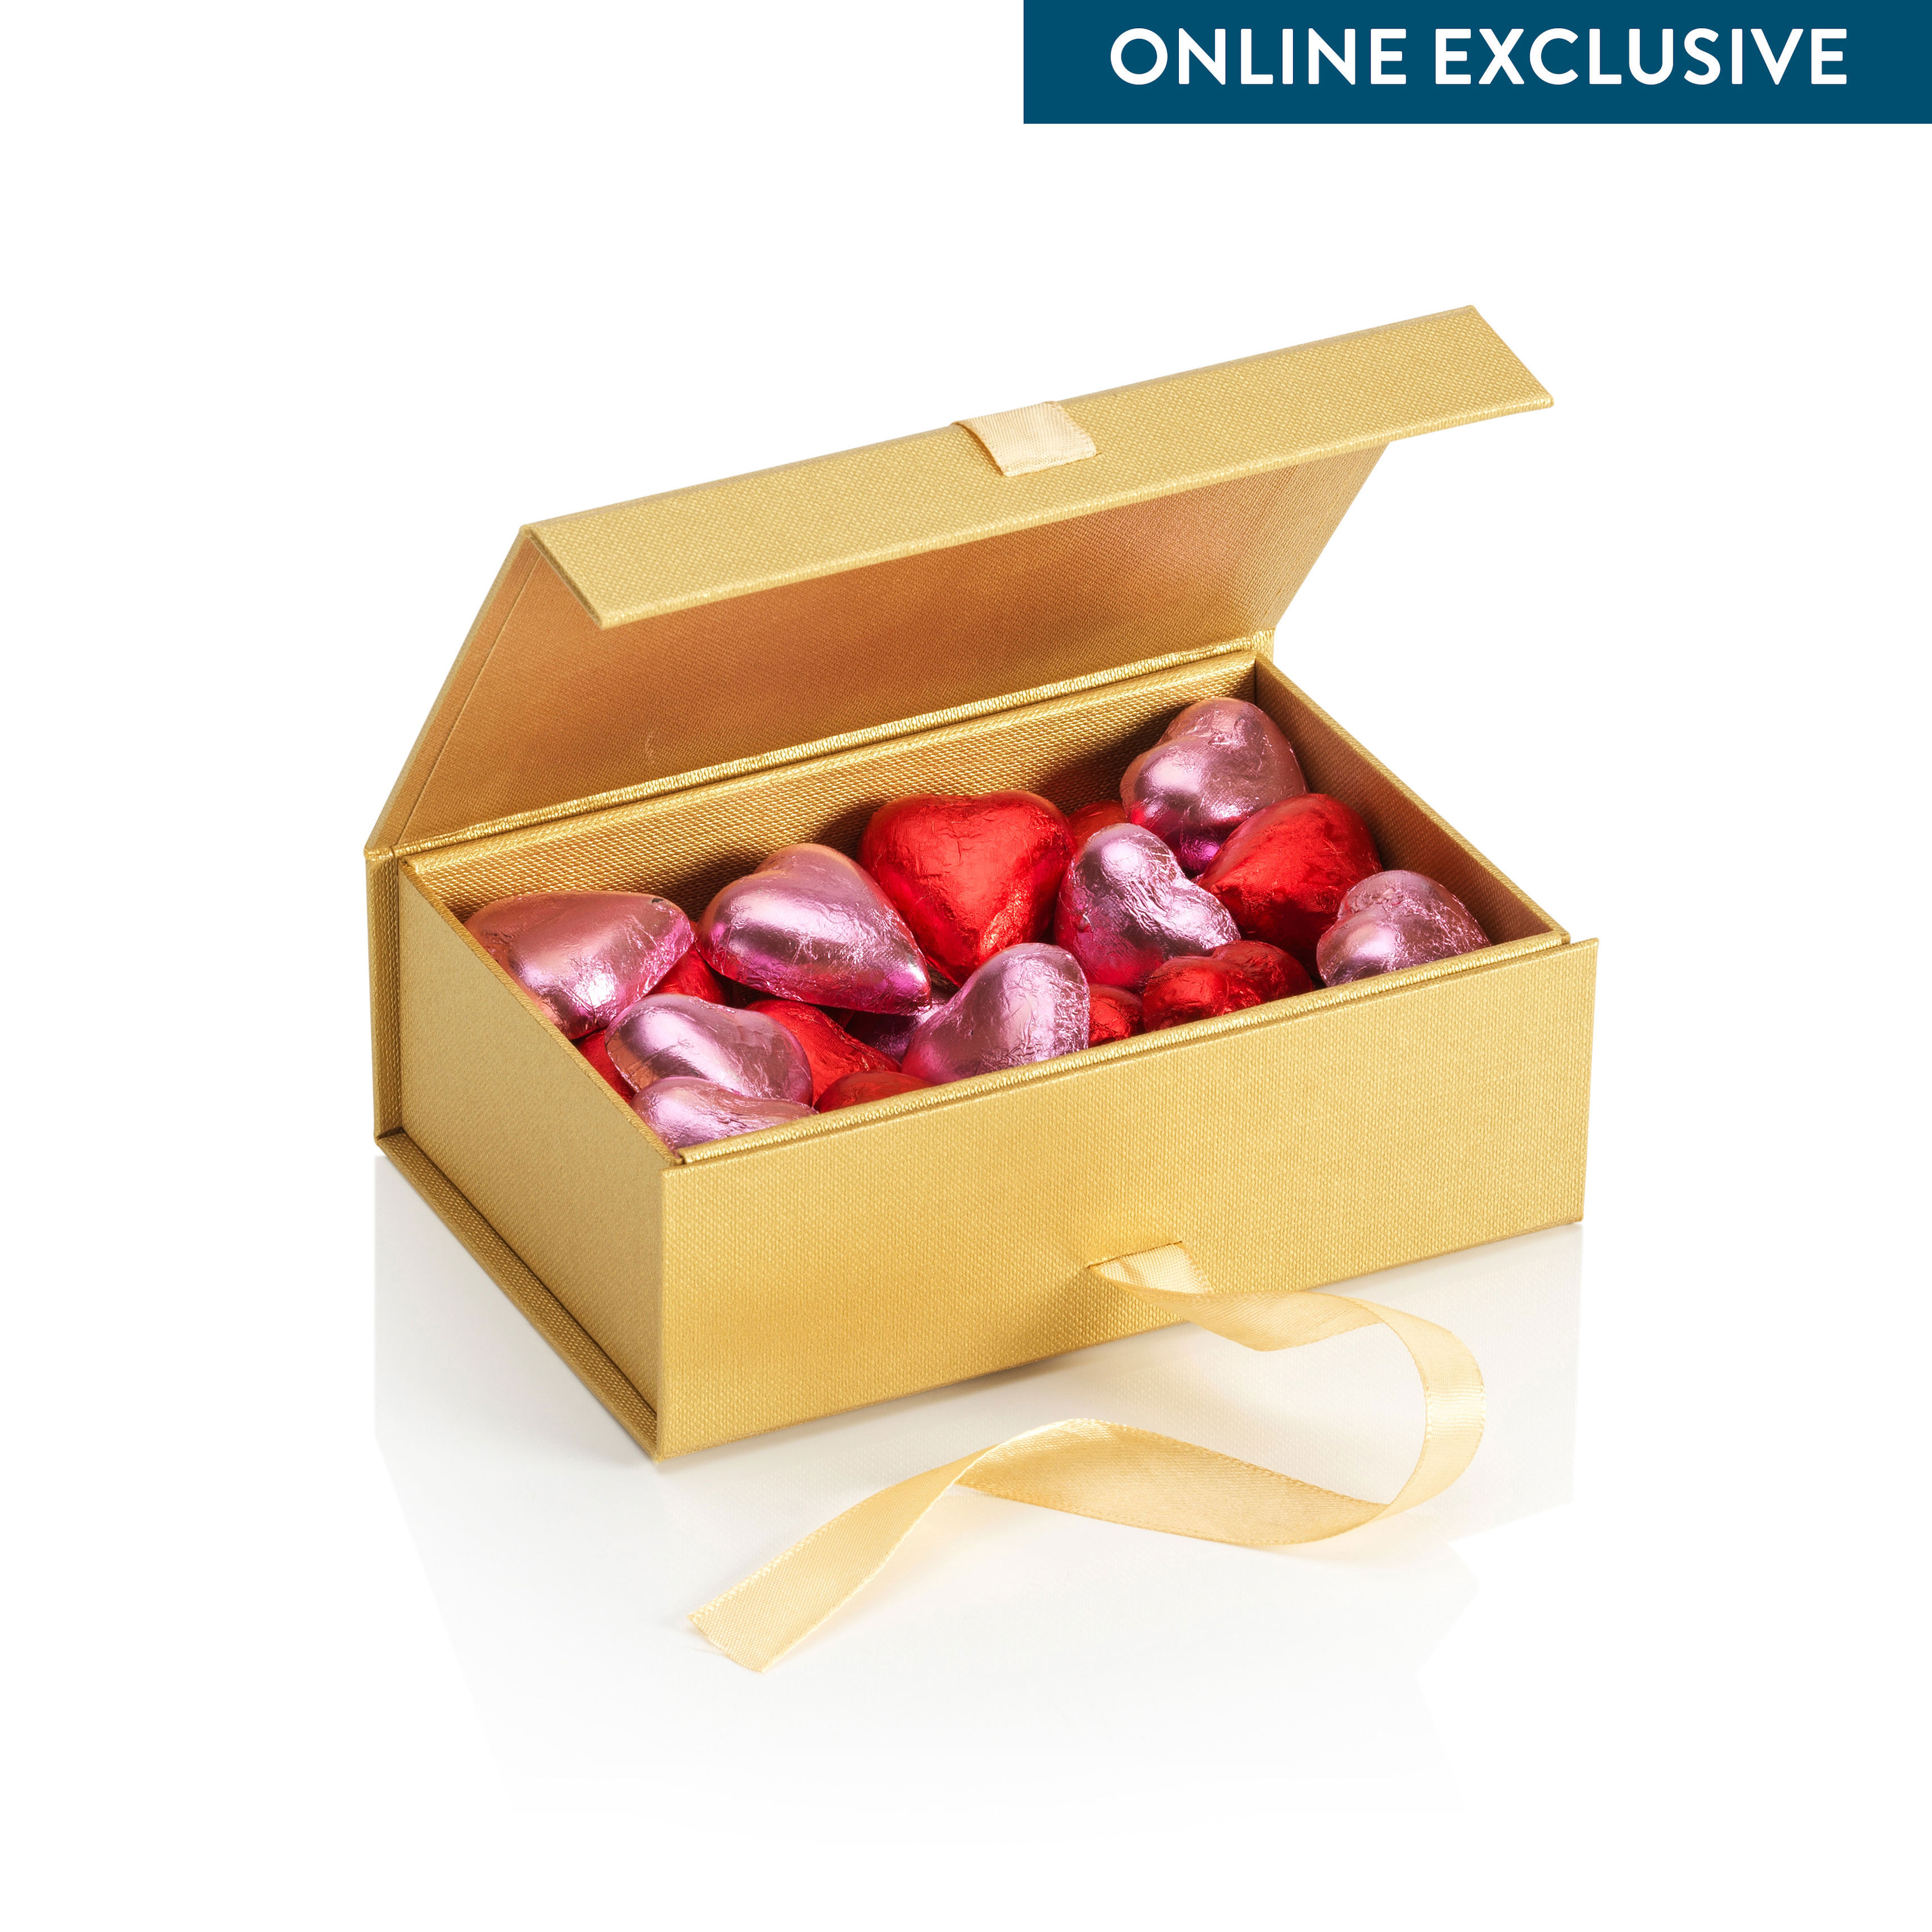 Venchi Large Heart Gift Tin with Assorted Chocolates 5.29 oz